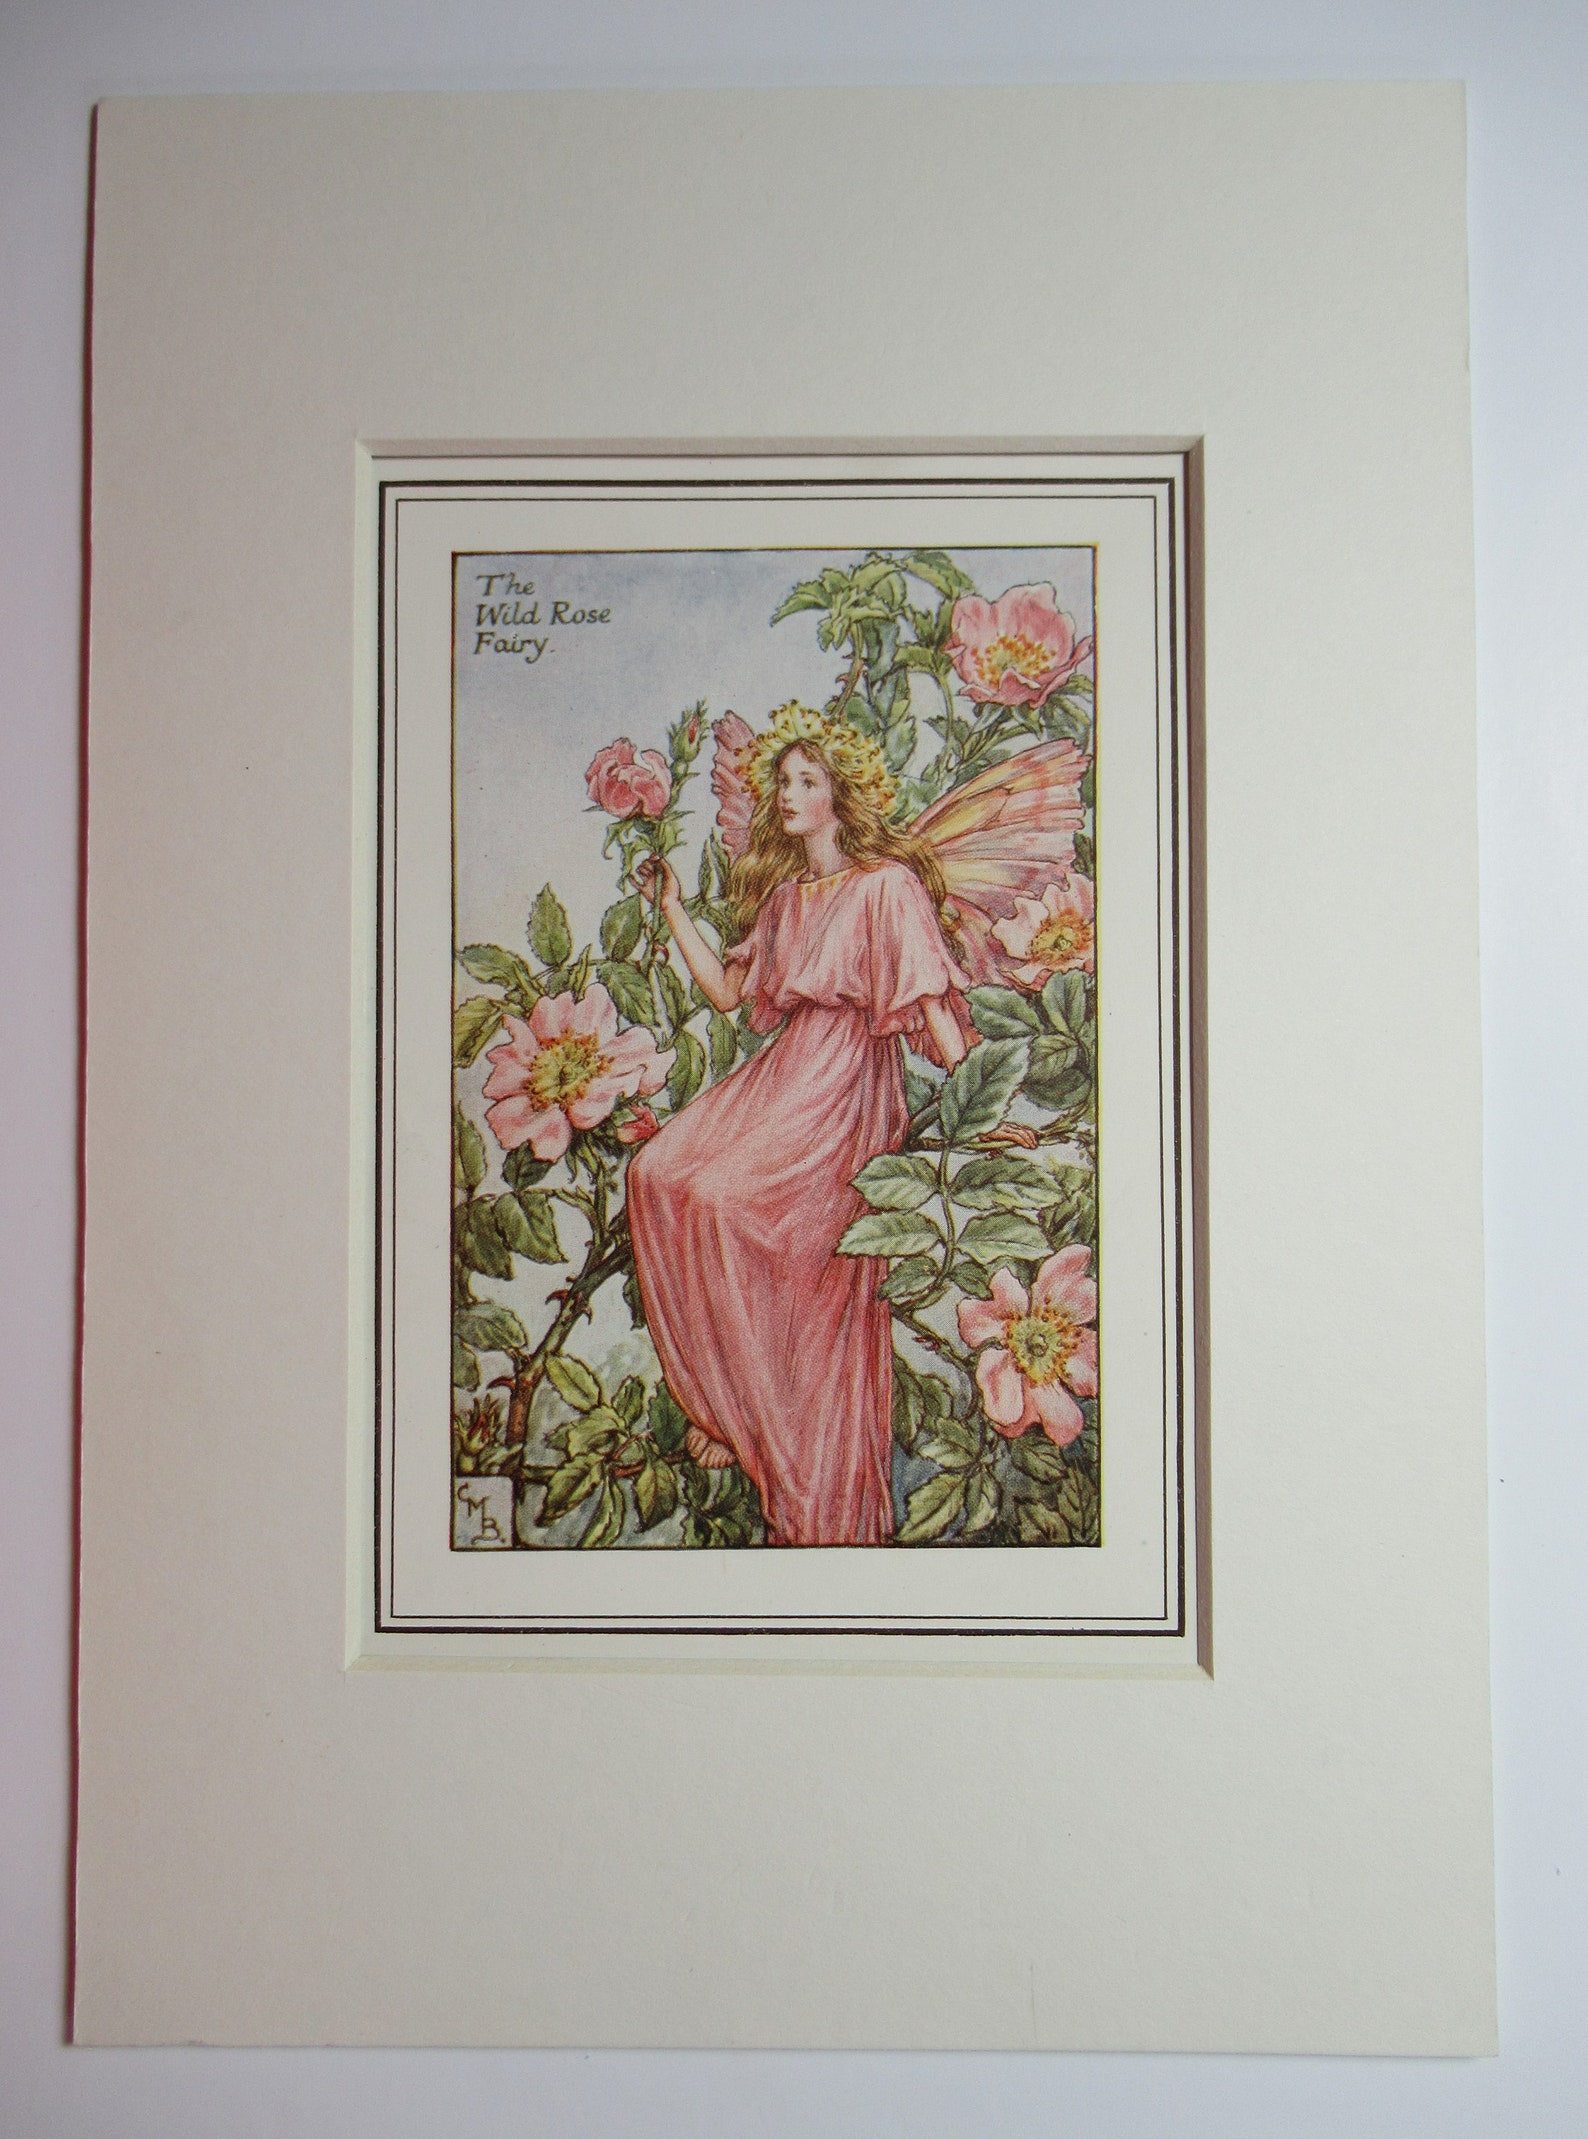 Flower Fairiesfairy The Wild Rose Fairy Vintage Print Rare Etsy